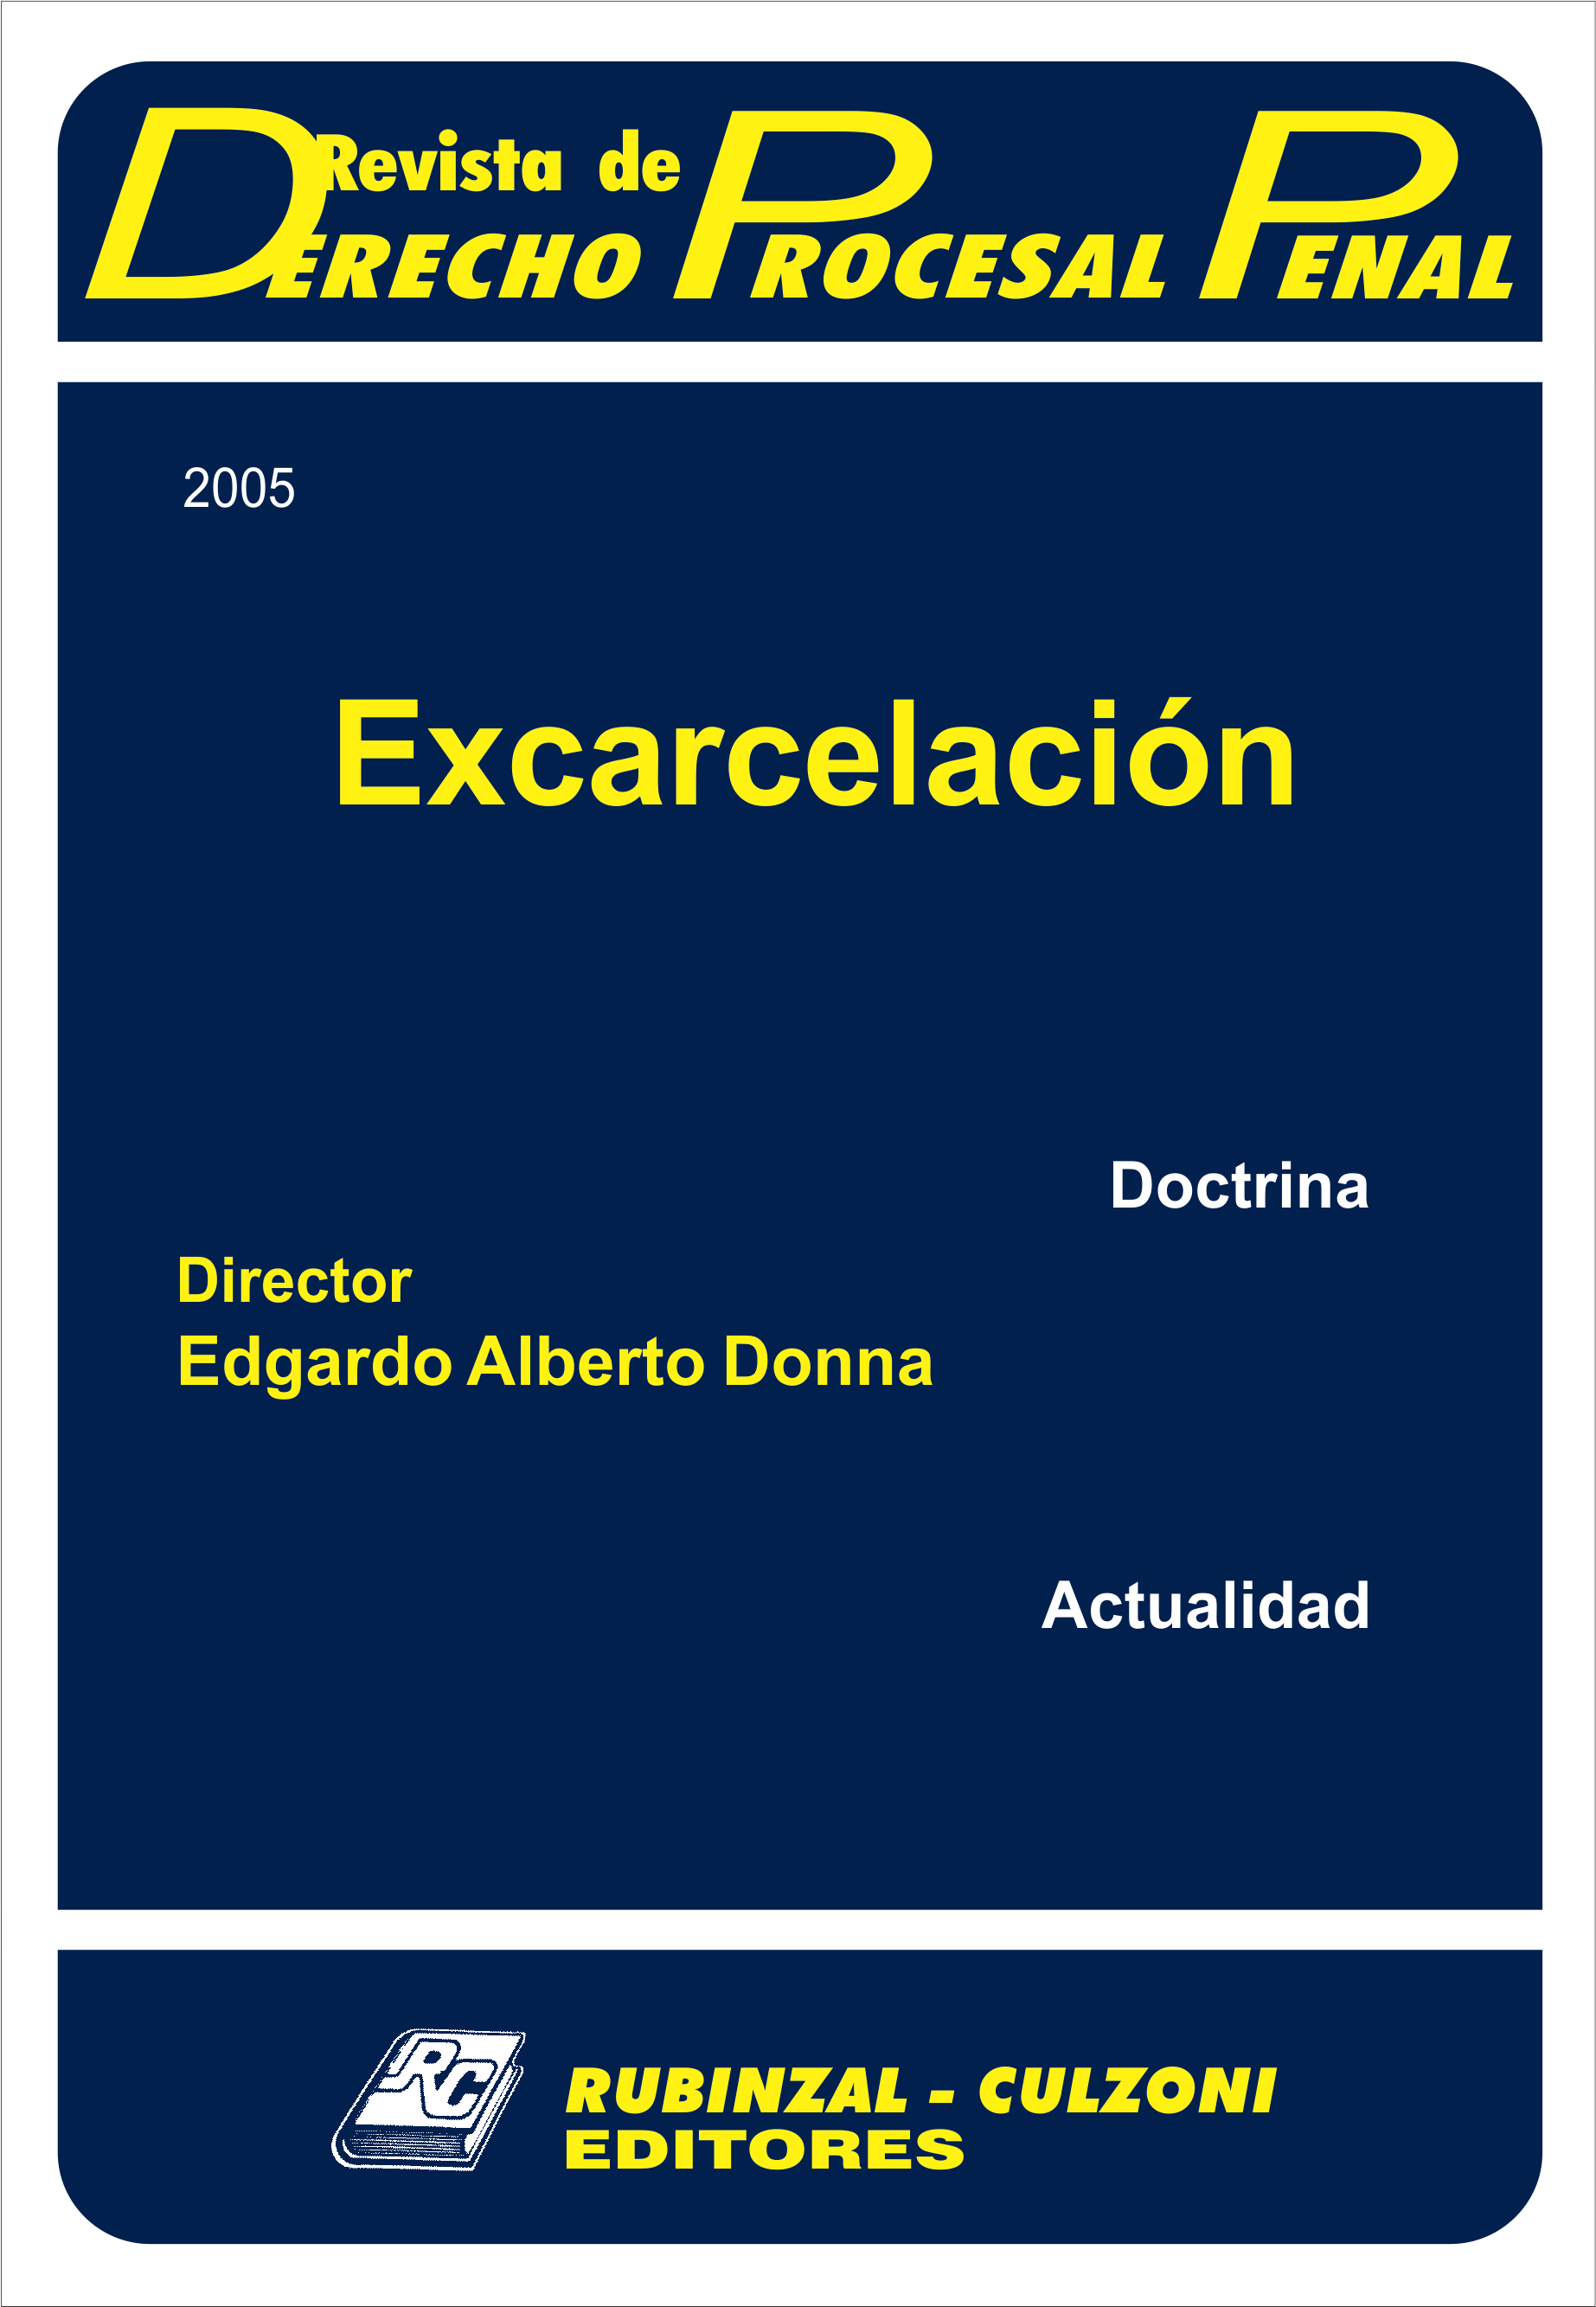 Revista de Derecho Procesal Penal - Excarcelación 